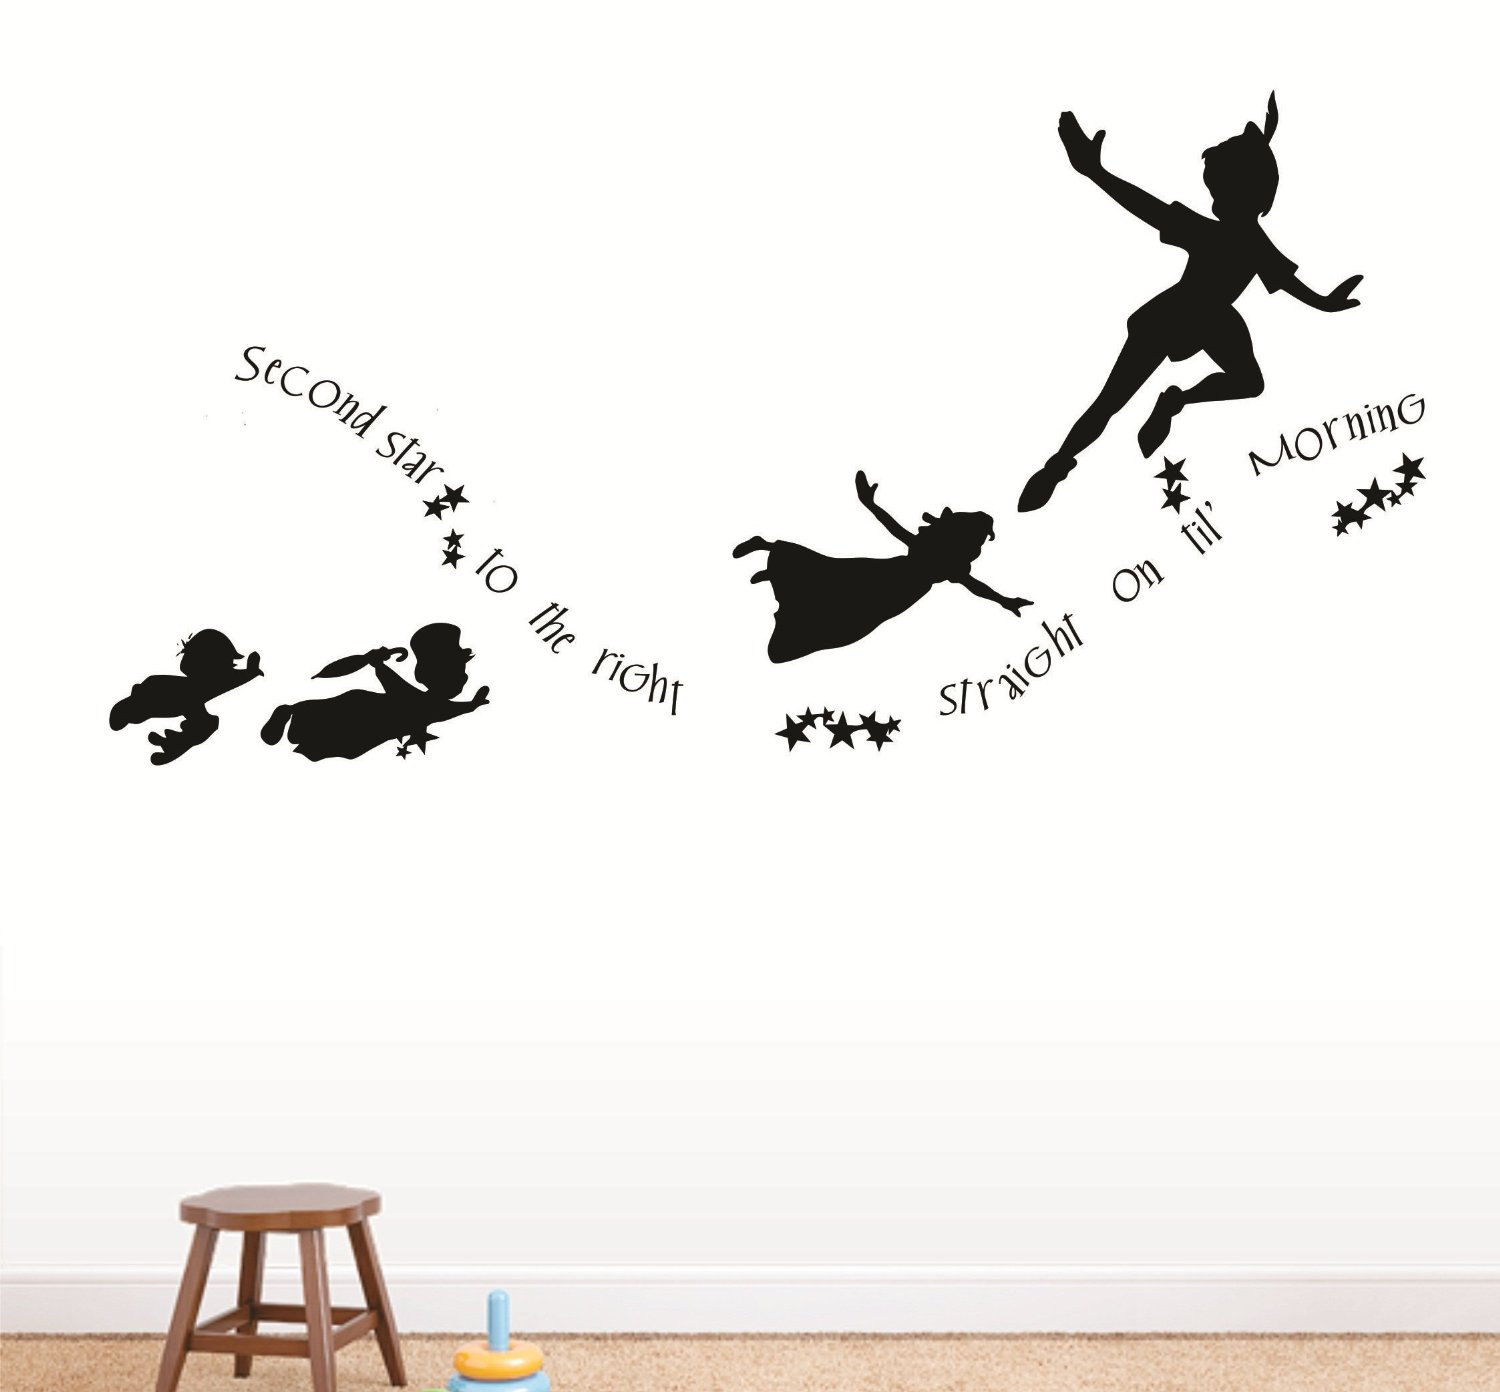 Peter Pan Silhouette at GetDrawings | Free download